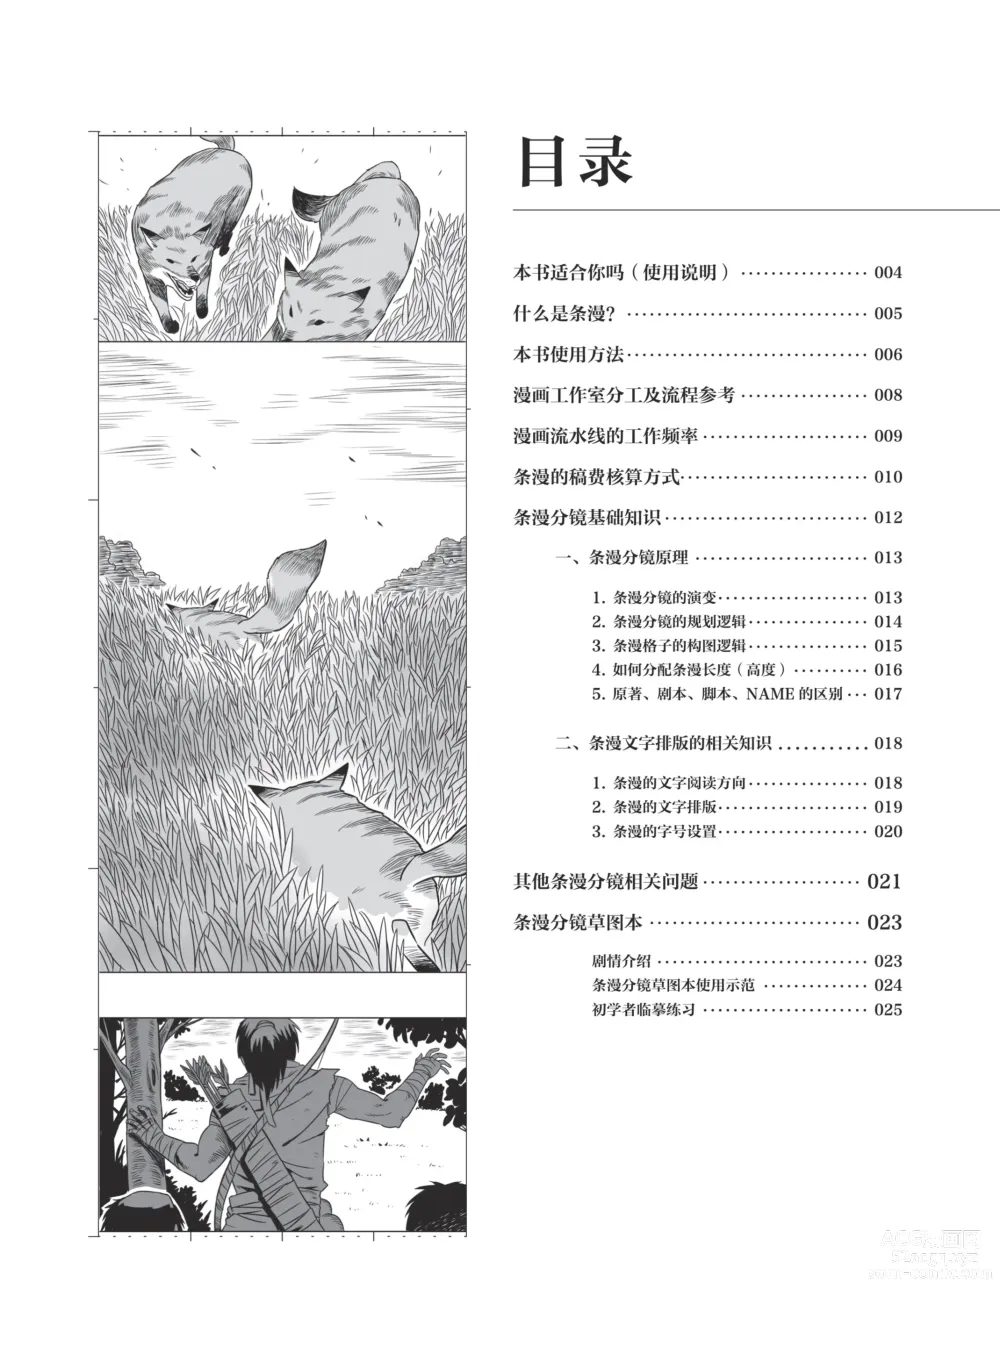 Page 4 of manga 条漫分镜草图本